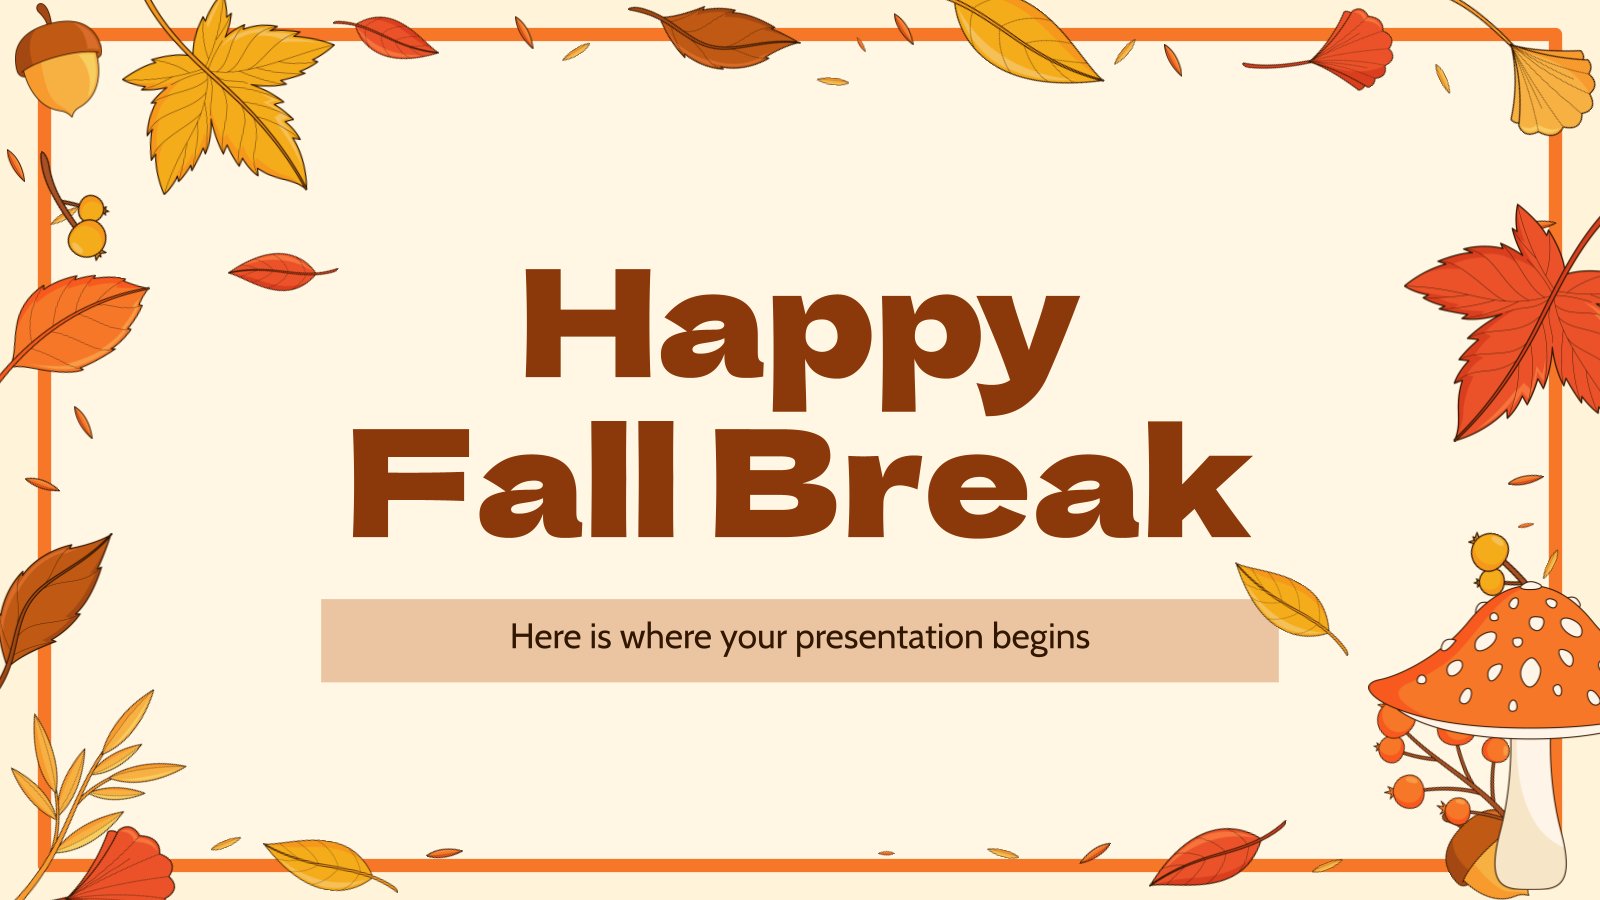 Happy Fall Break presentation template 